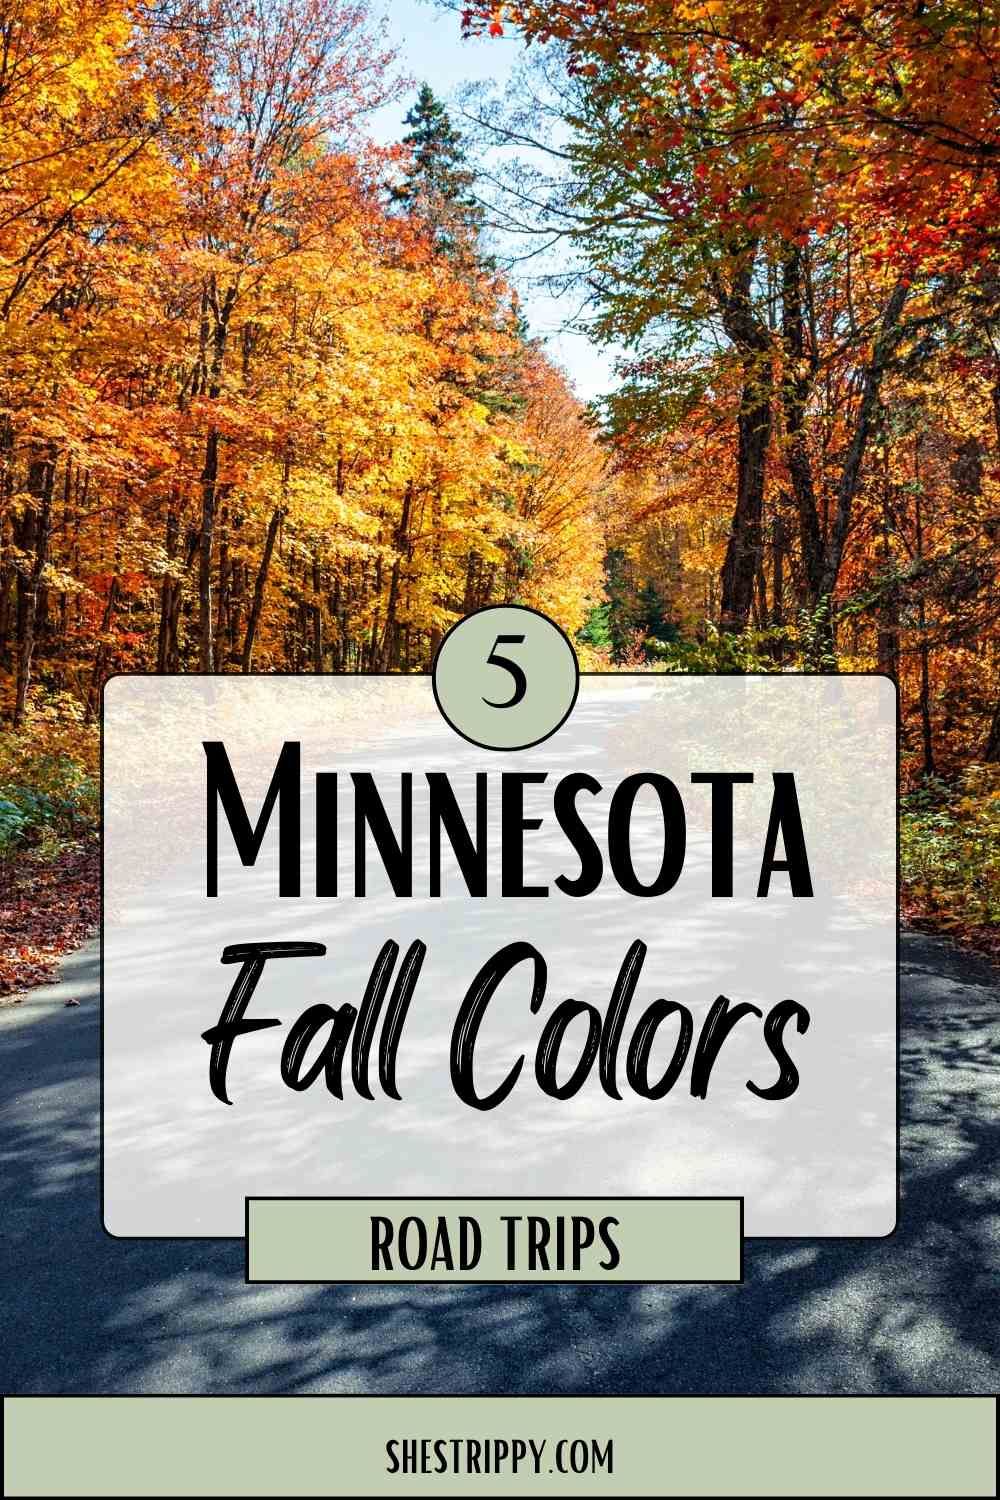 Road Trips for Fall Colors in Minnesota #fallcolors #roadtripsforfallcolors